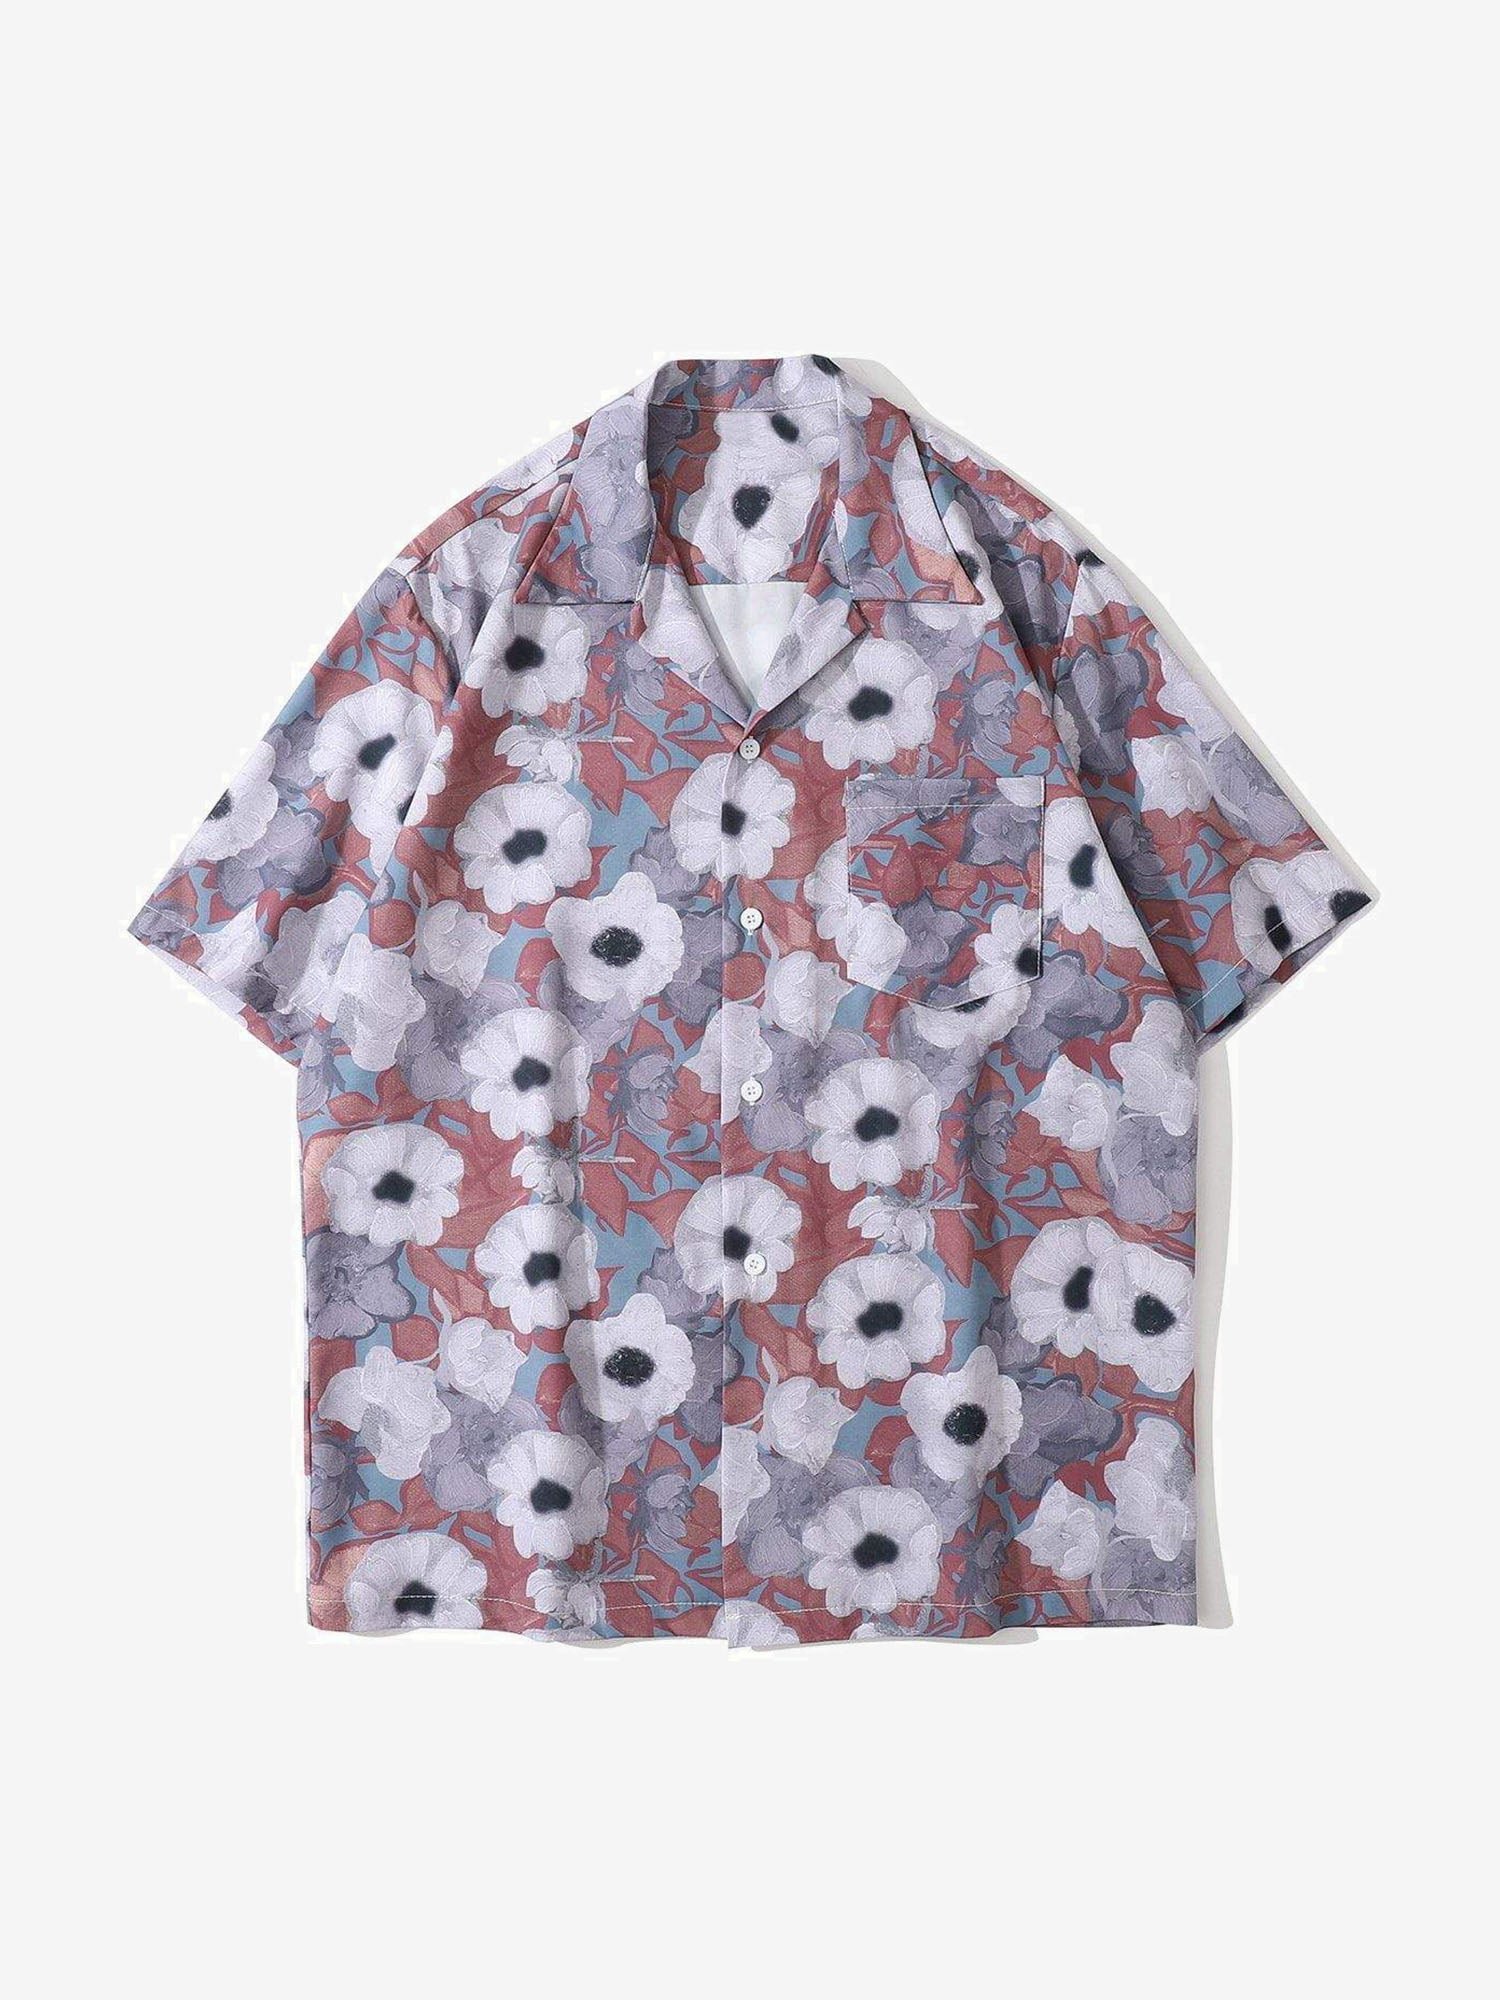 JUSTNOTAG Briar Flower Holiday Wind Short Sleeve Shirt